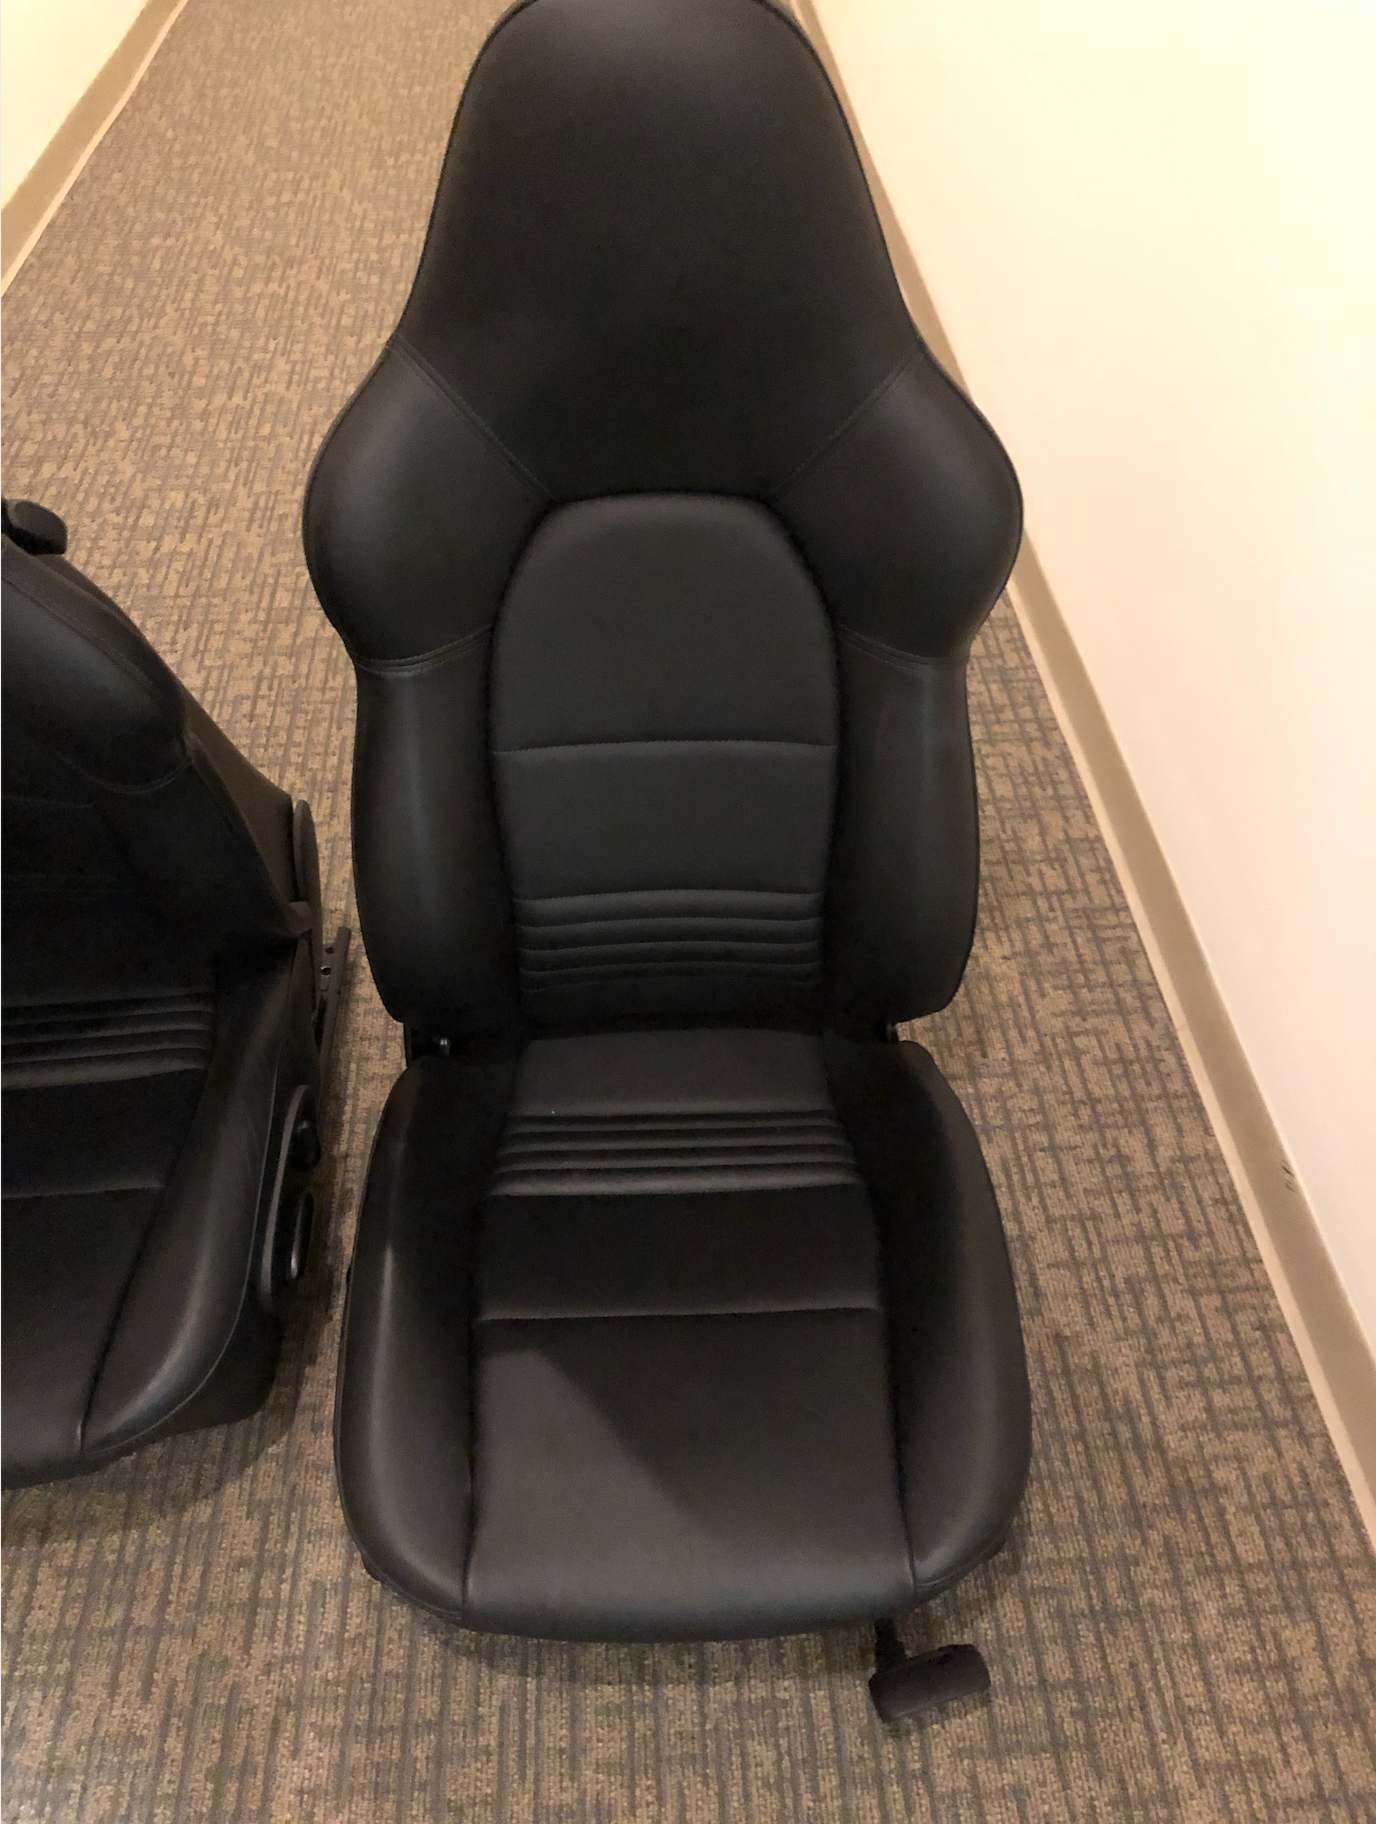 Interior/Upholstery - MINT 996 GT3 Hardback Seats - New - 1999 to 2005 Porsche GT3 - Philadelphia, PA 19130, United States